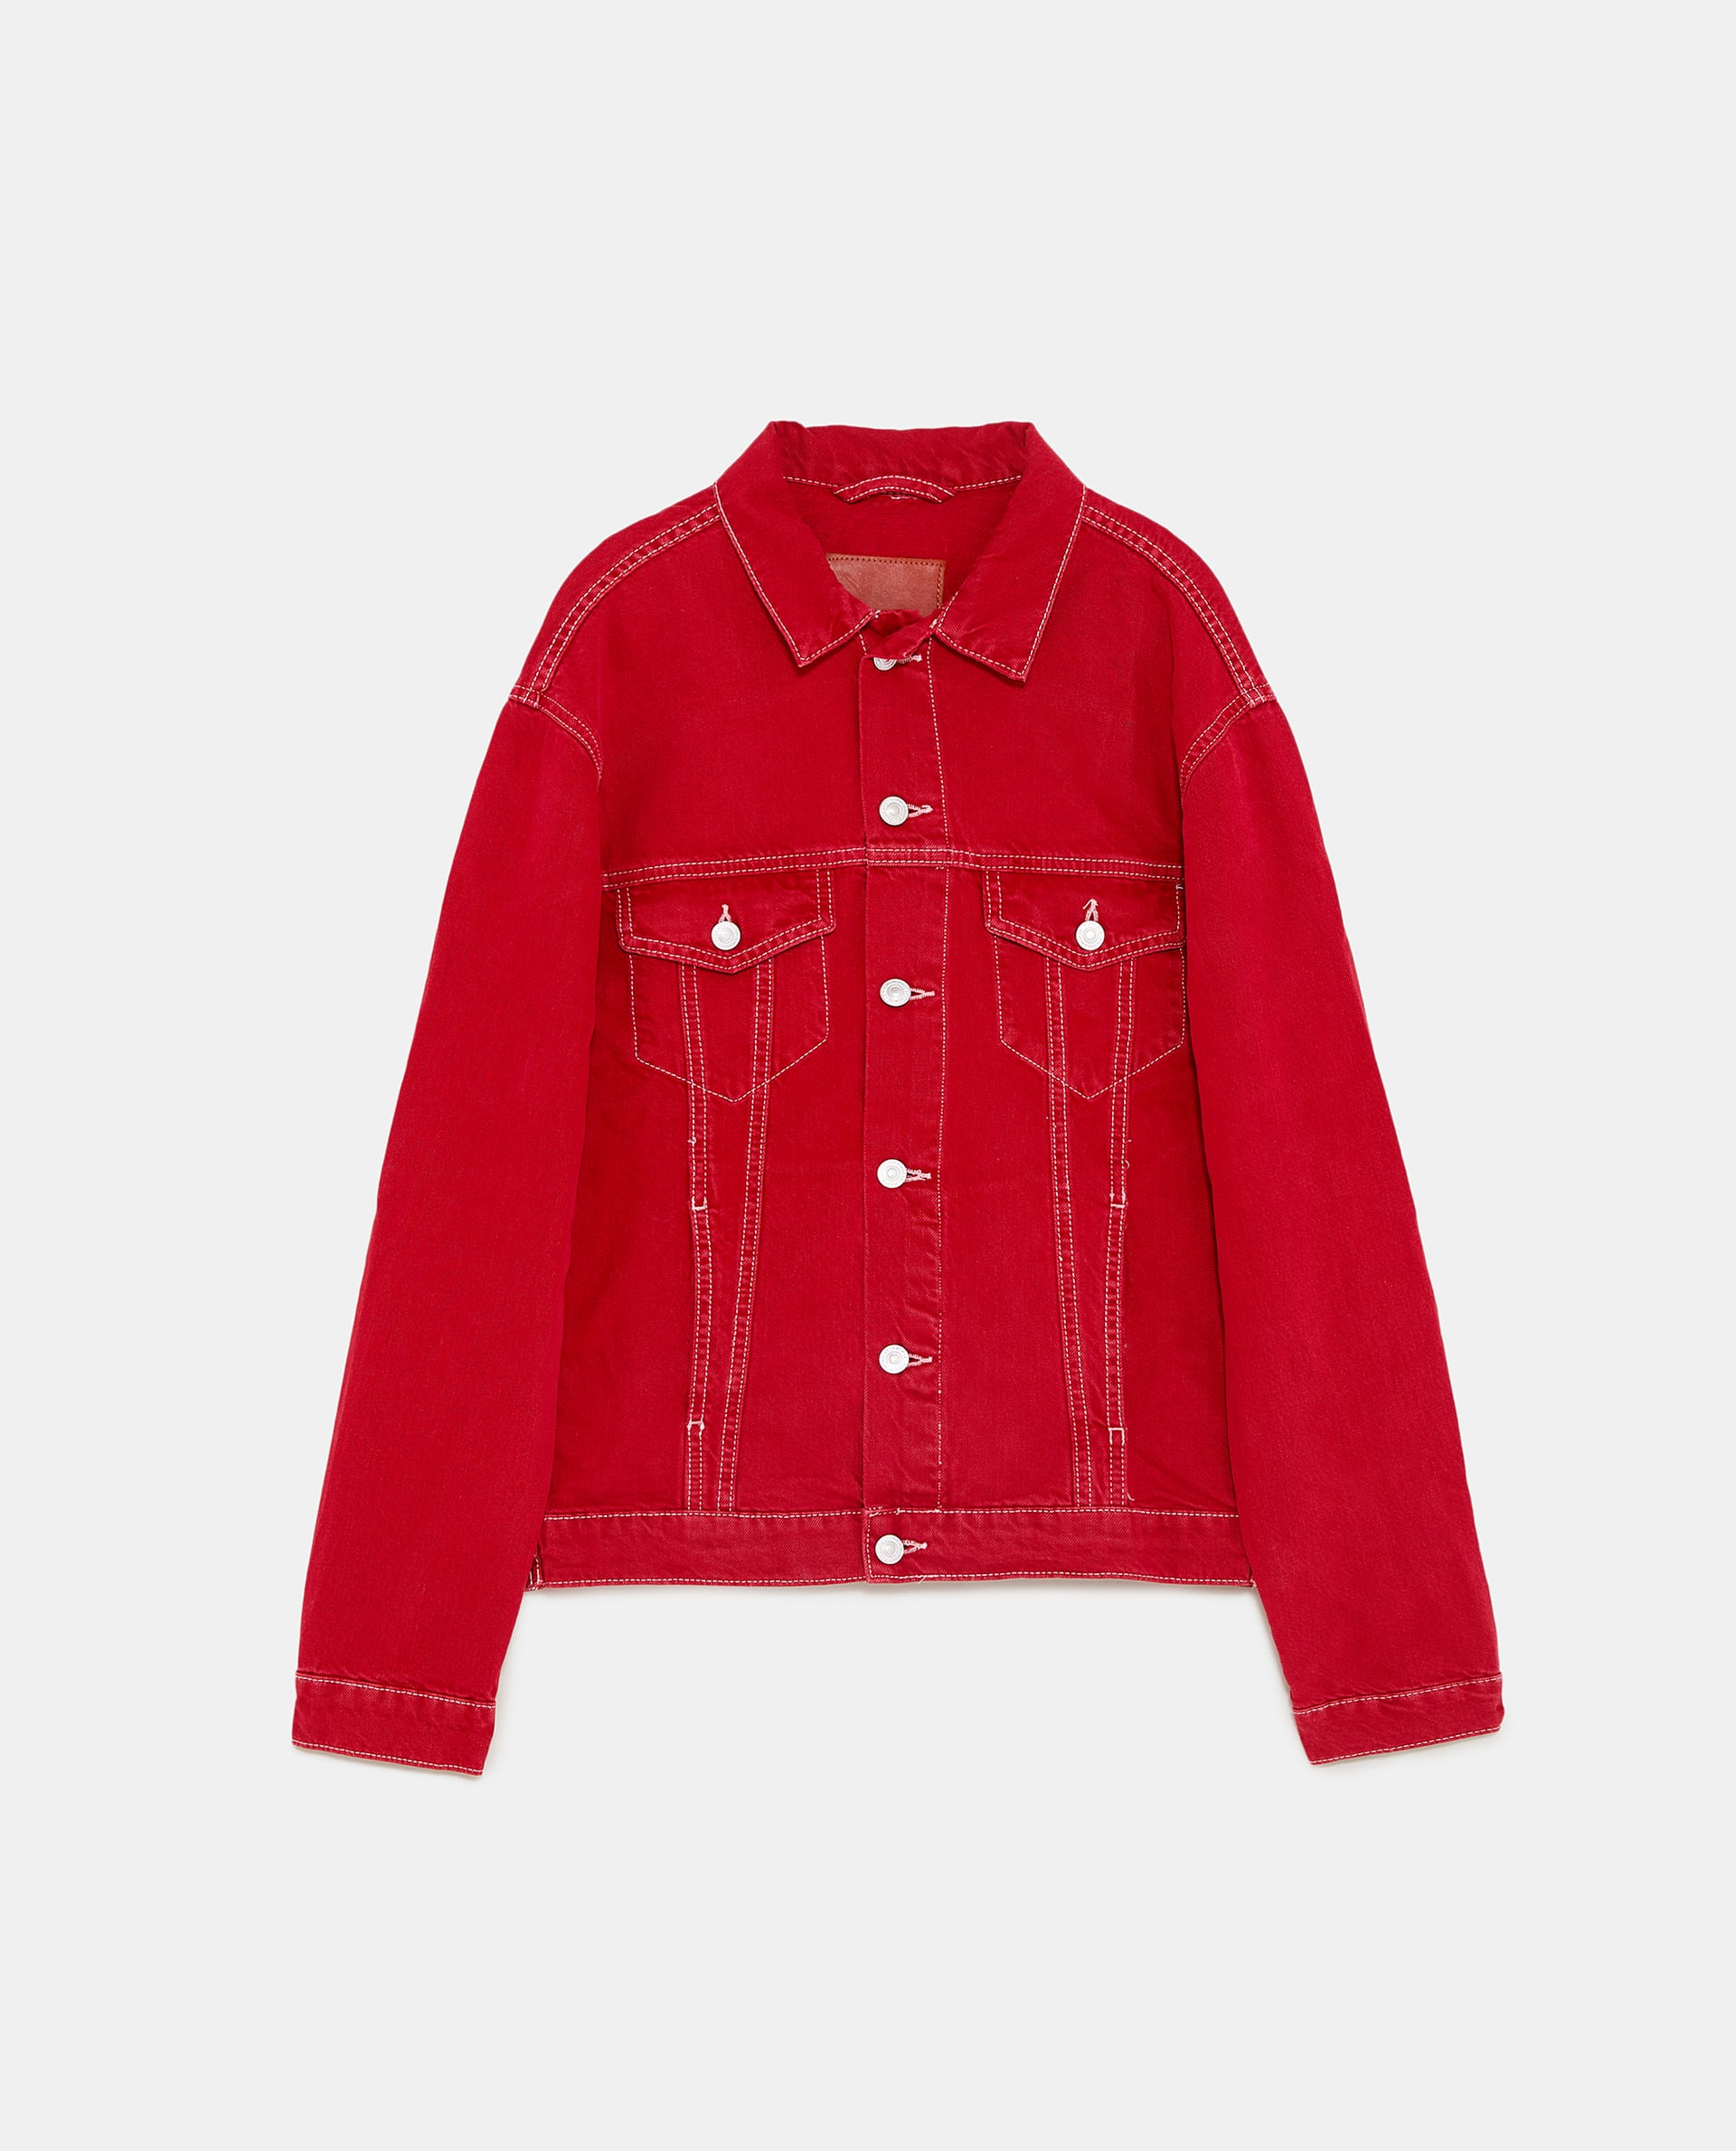 Zara red denim jacket – by Hannah Rochell